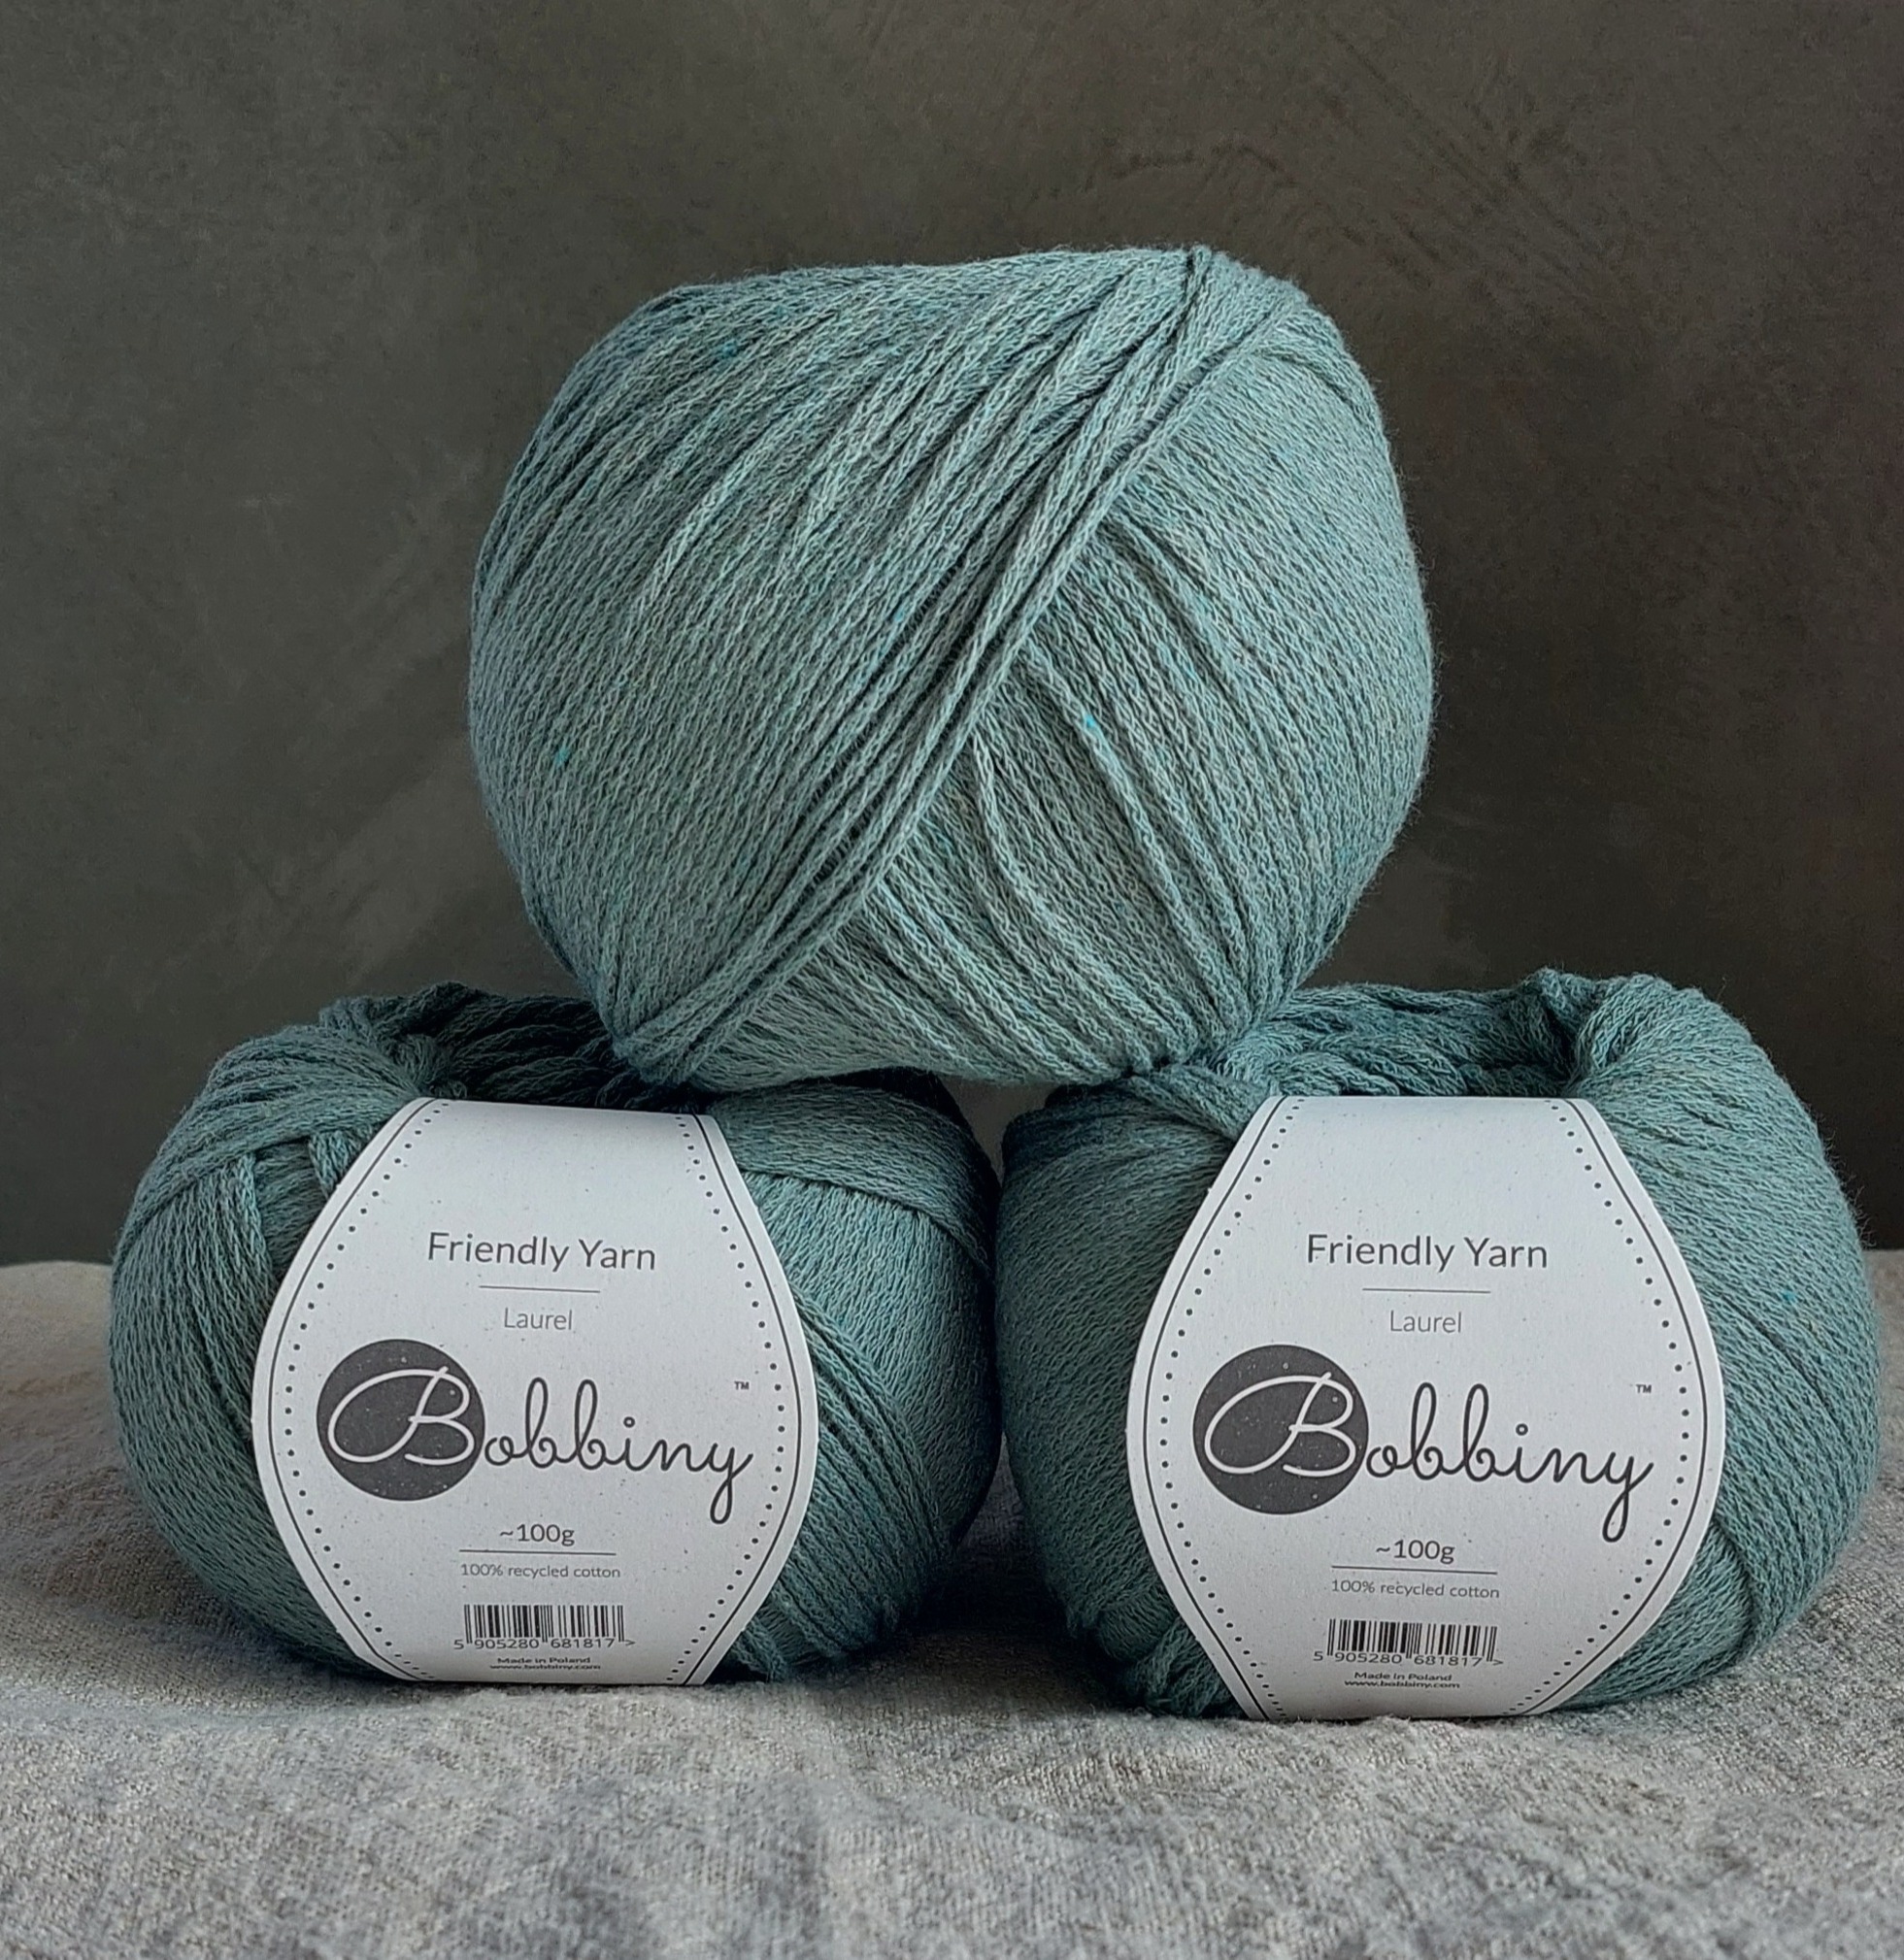 Friendly yarn - Bobbiny